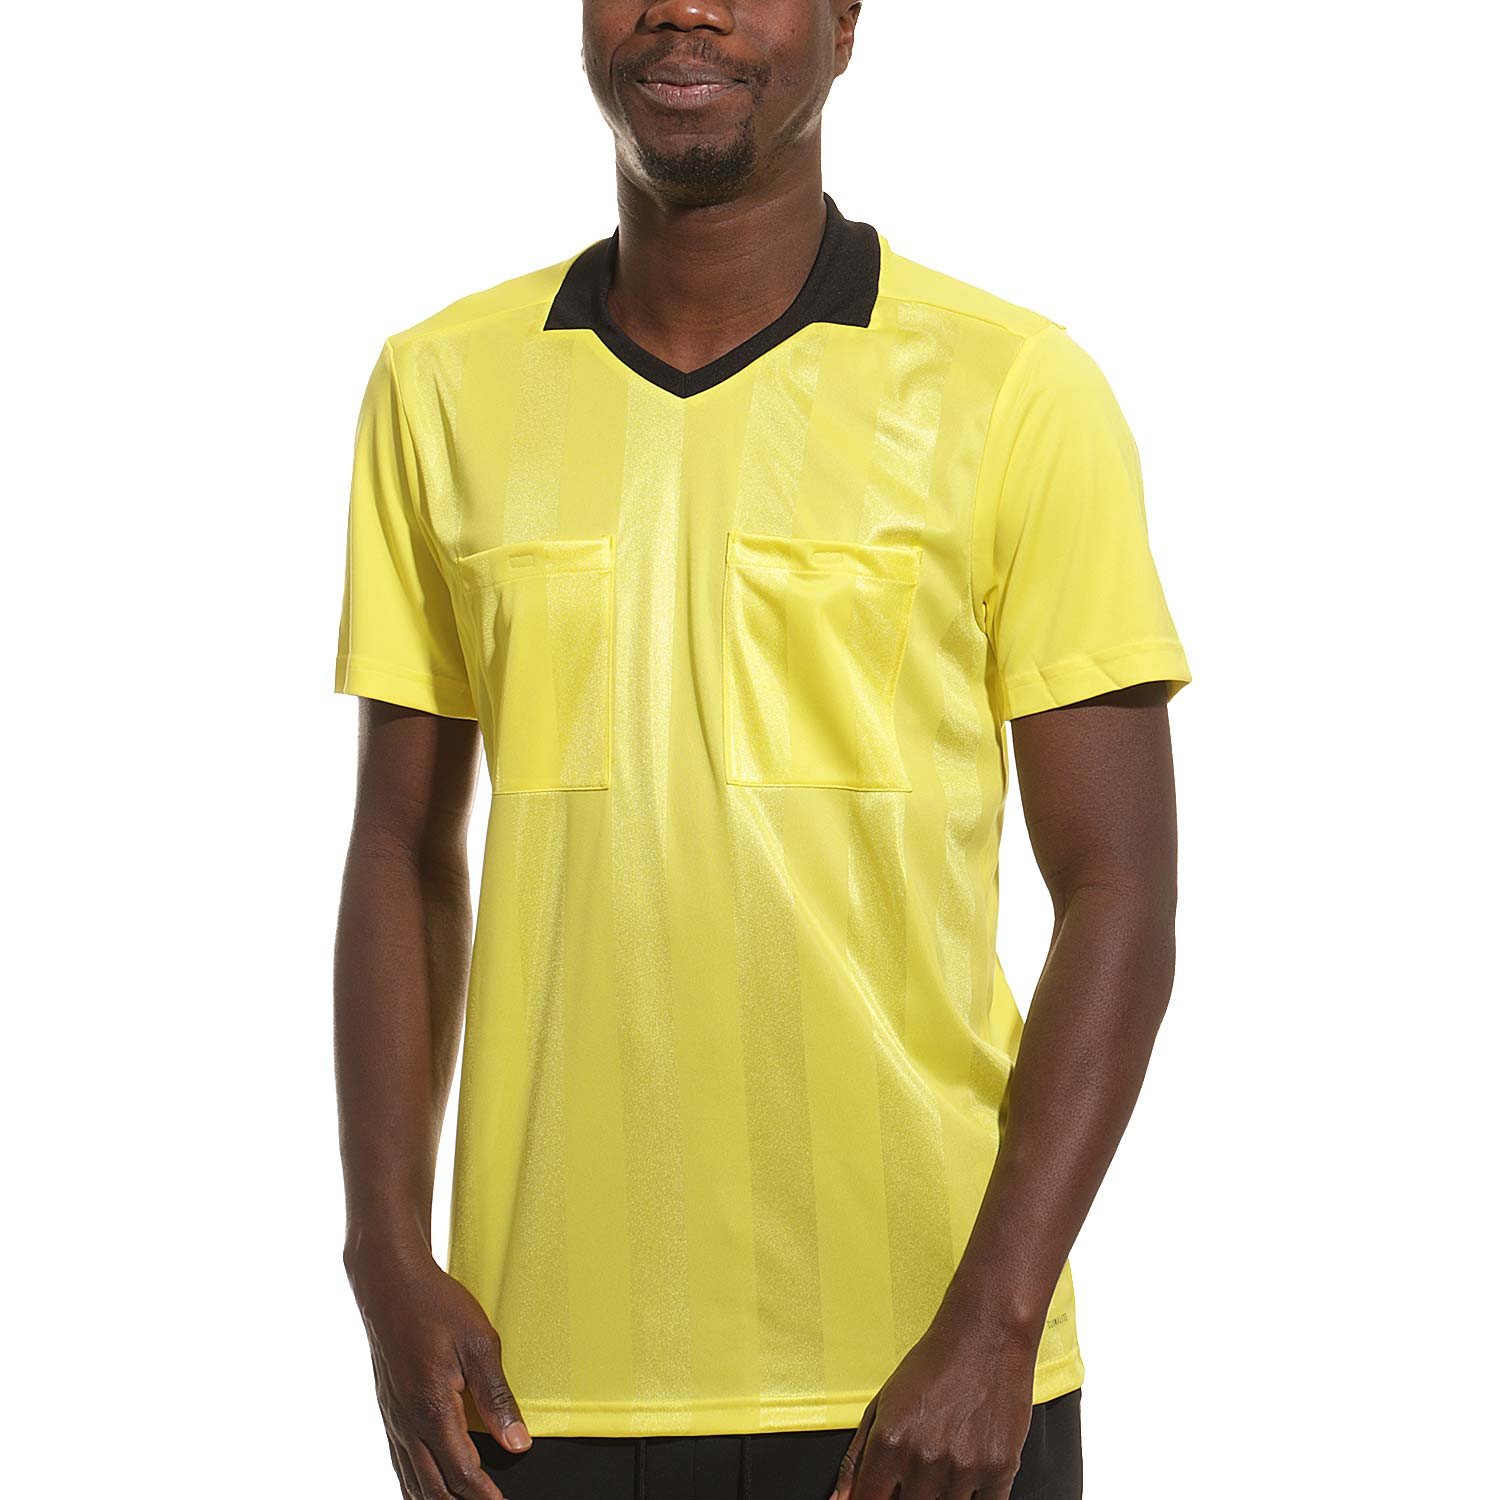 Camiseta adidas árbitro Ref 18 amarilla | futbolmania